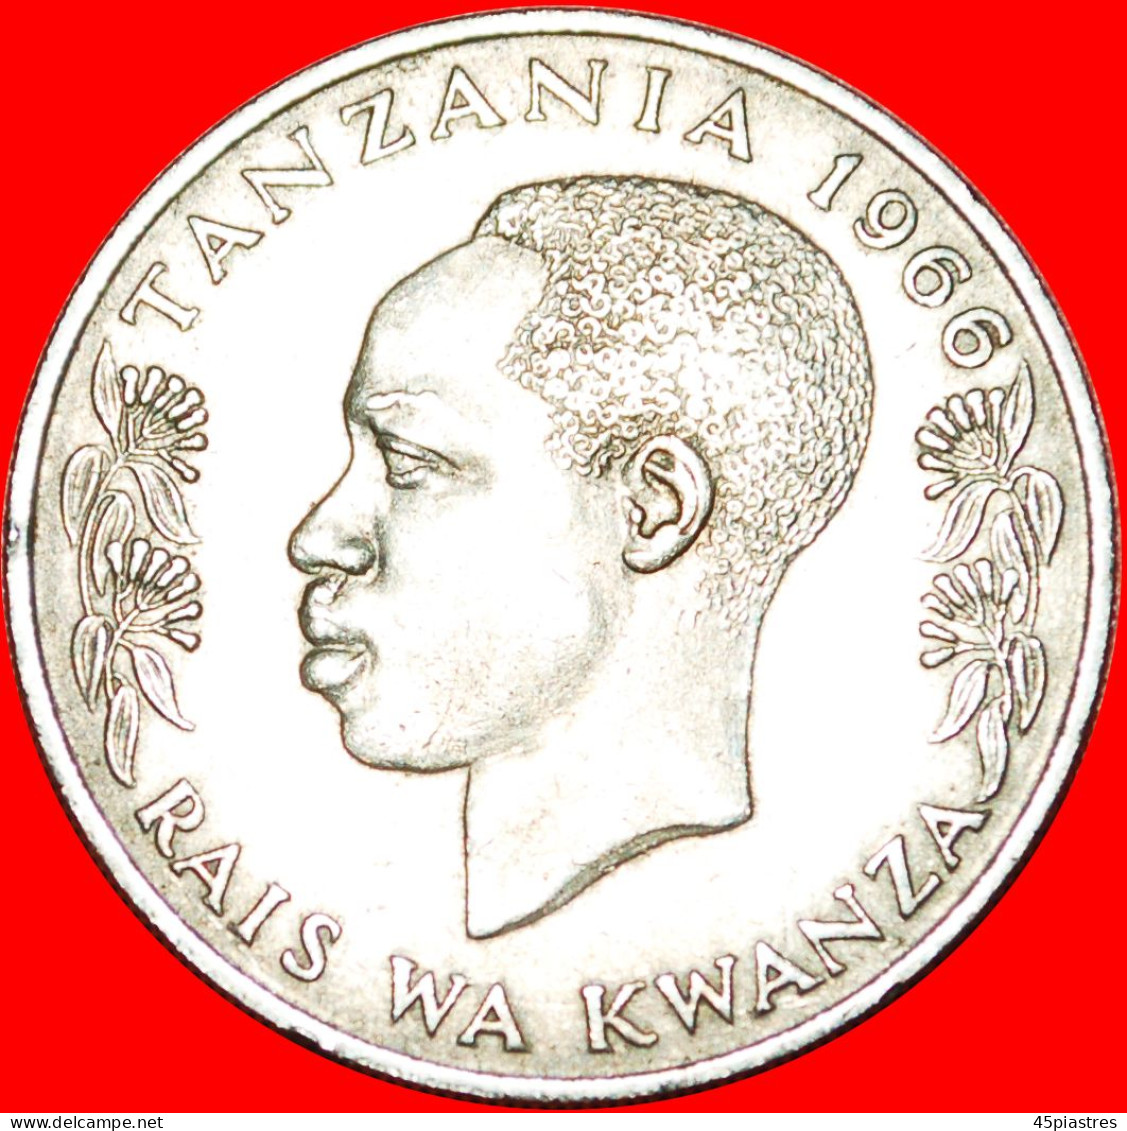 &#9733;TORCH: TANZANIA &#9733; 1 SHILLING 1966! LOW START&#9733; NO RESERVE! Nyerere (1961-1962) - Tanzania